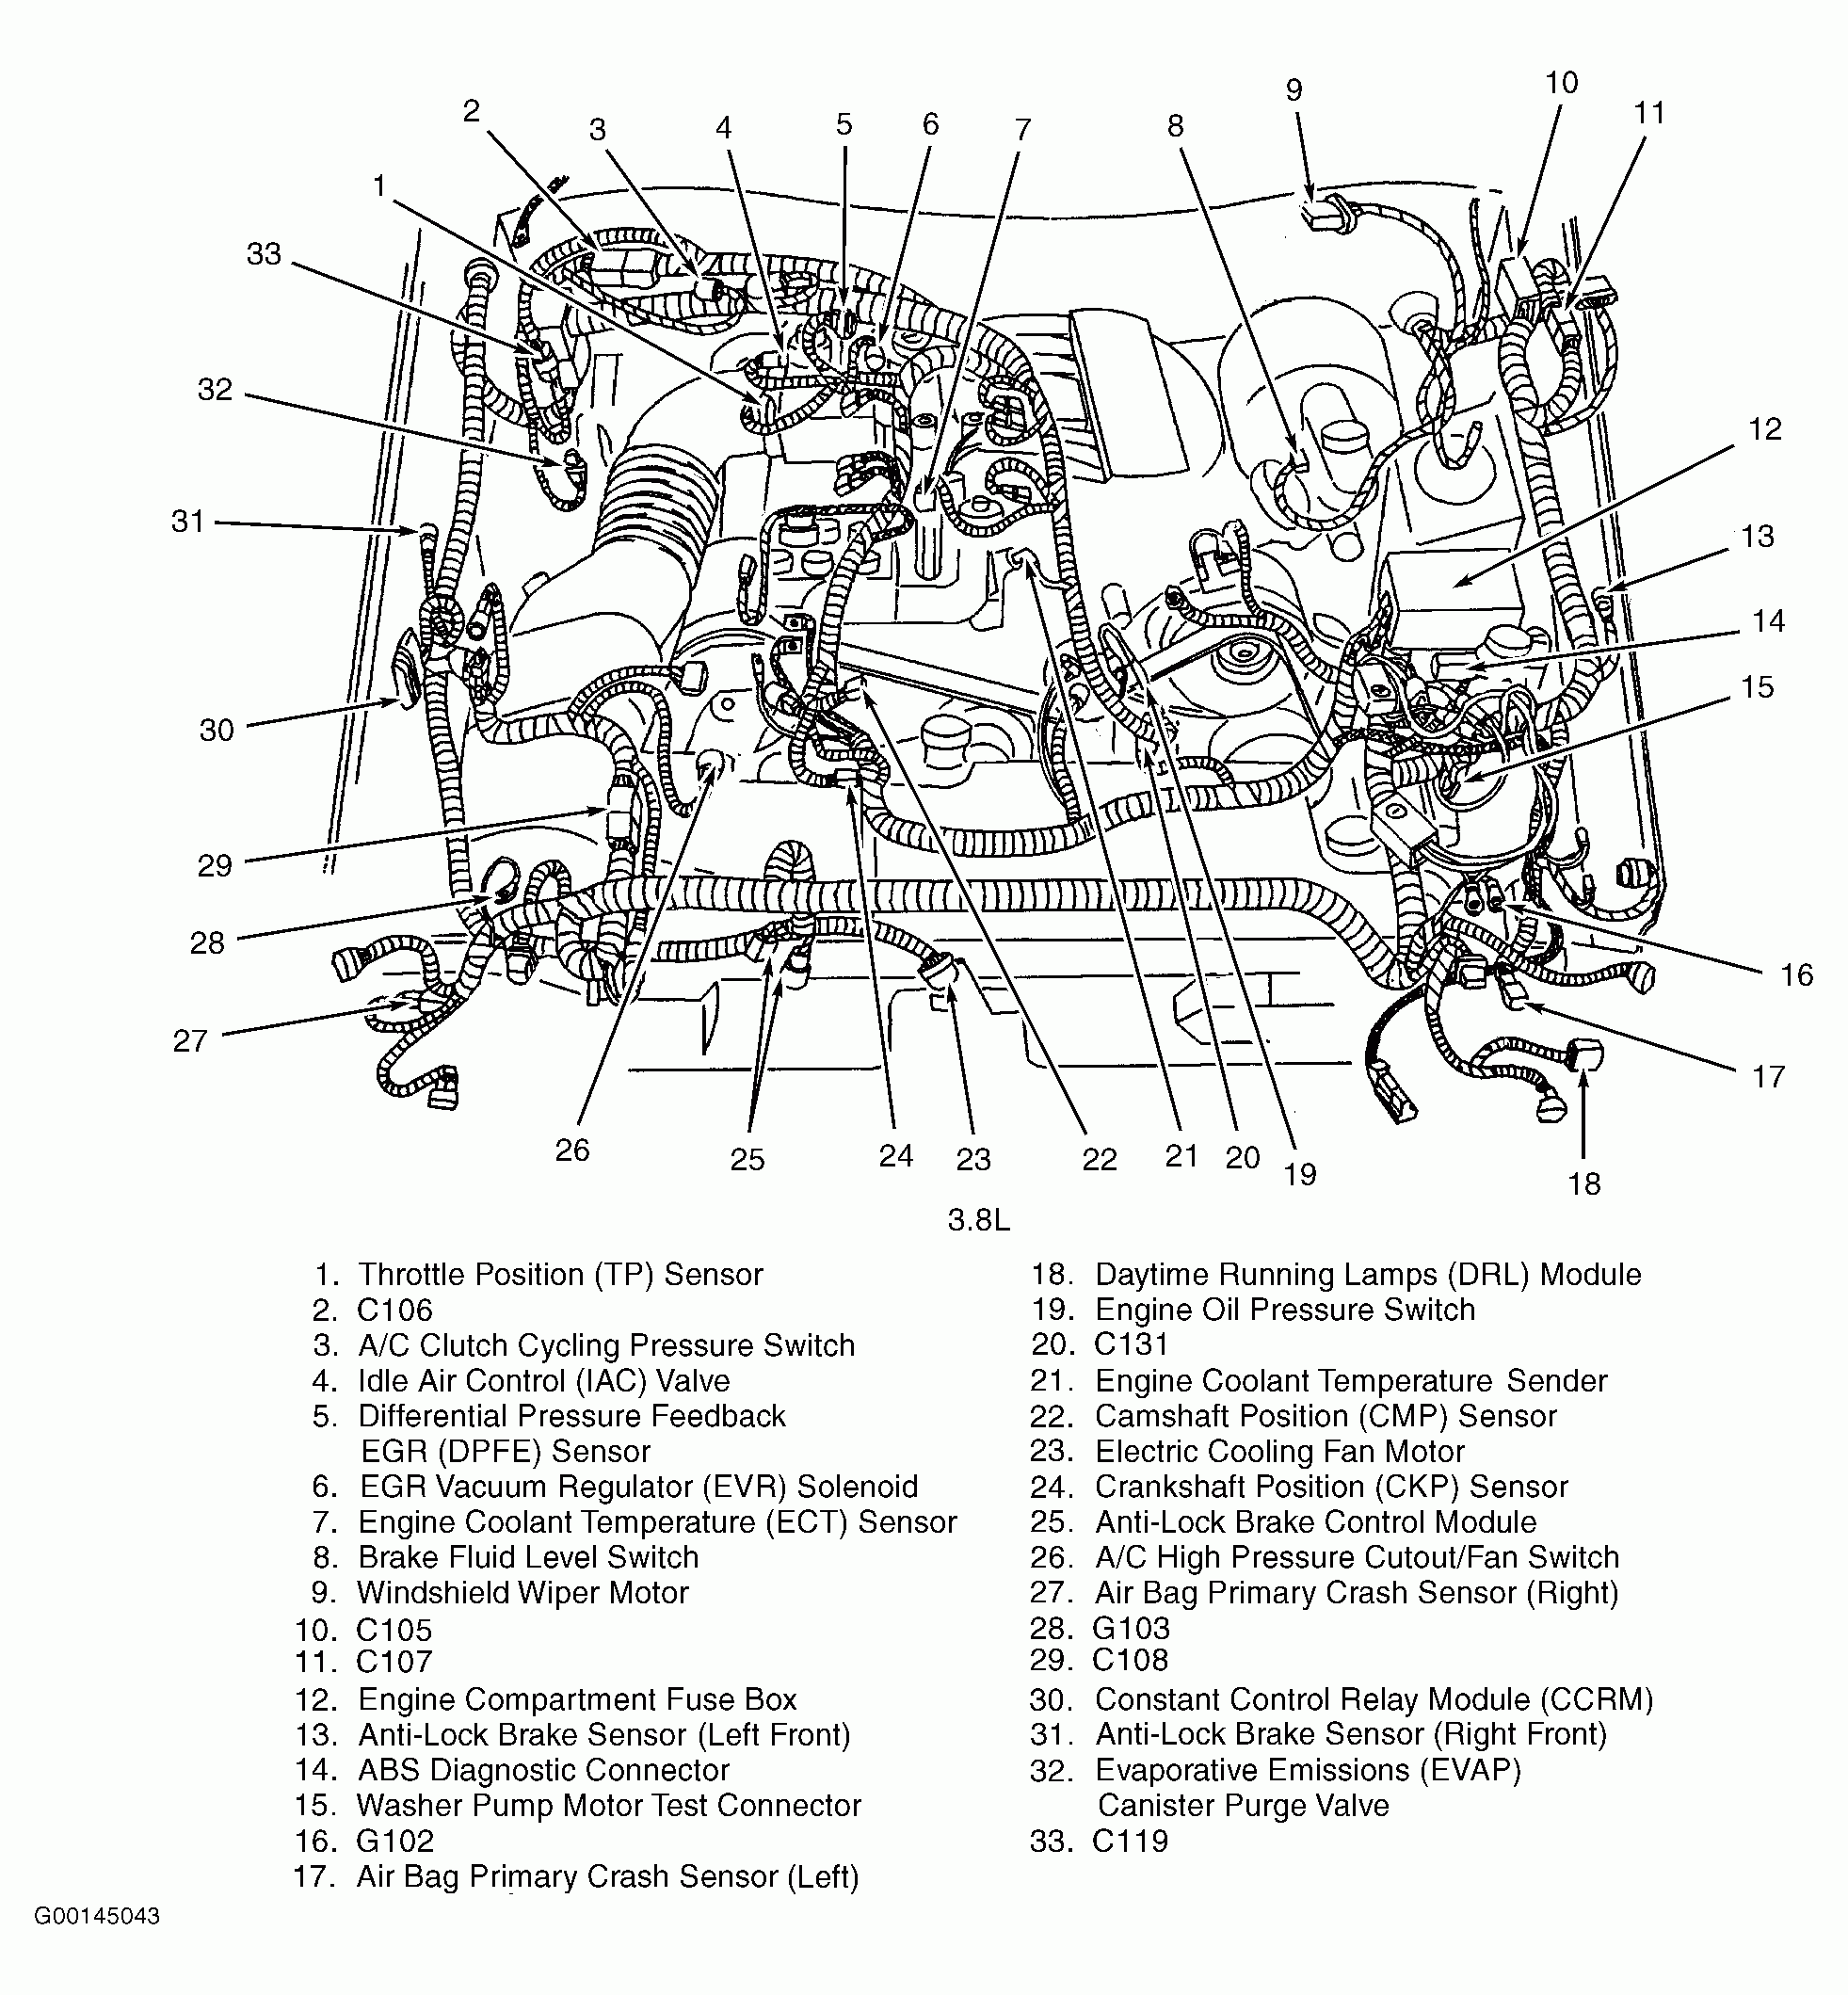 1998 Mustang V6 Engine Diagram List Hd Quality Wiring